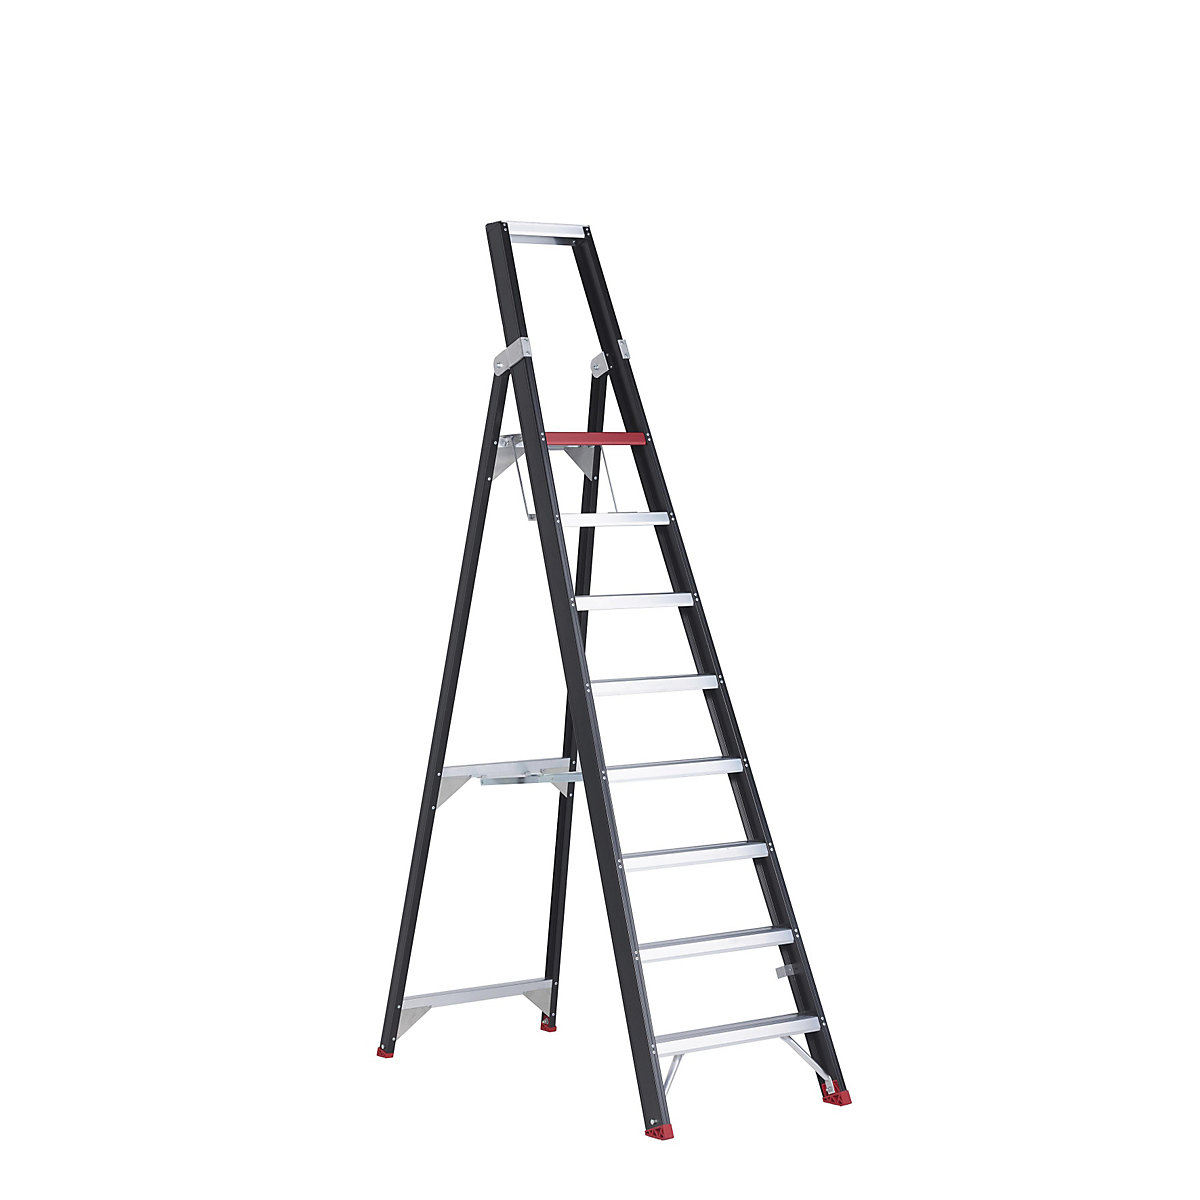 Safety step ladder – Altrex, single sided access, 8 steps incl. platform-13